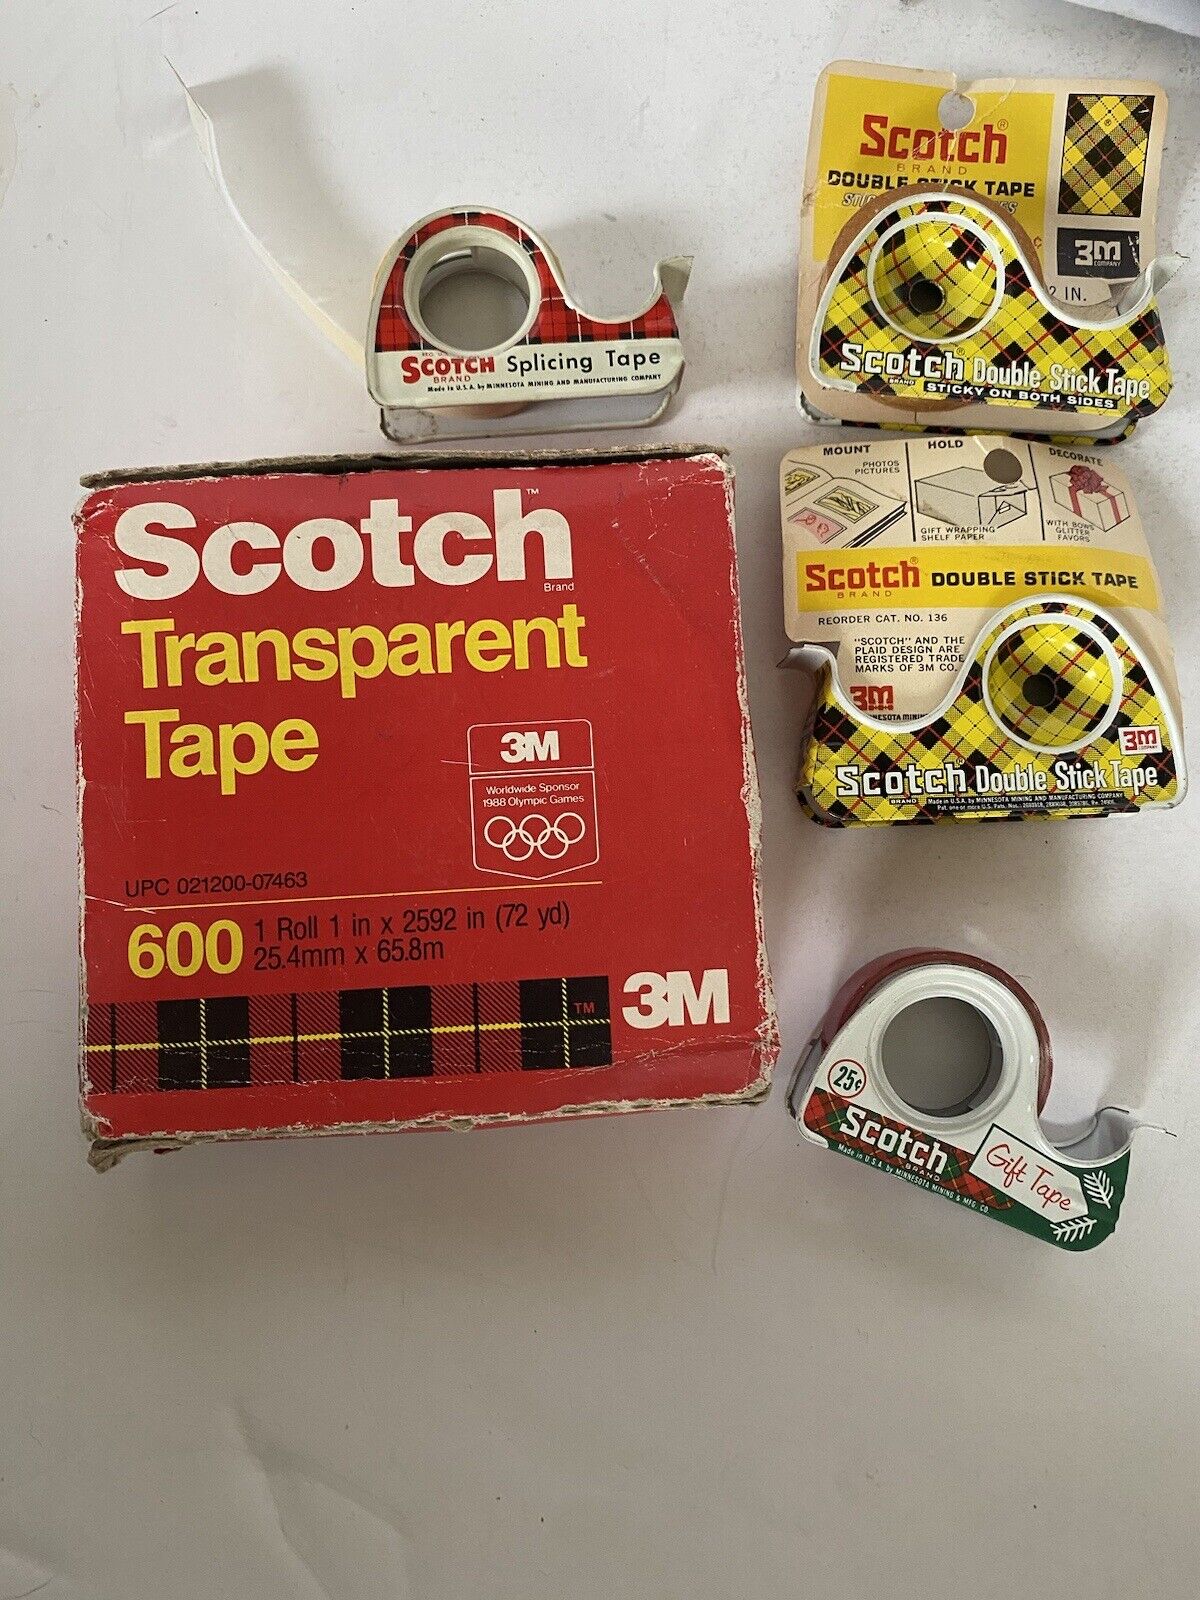 Vintage Scotch Tape Dispenser Tape Double Stick Splicing Transparent Lot 5